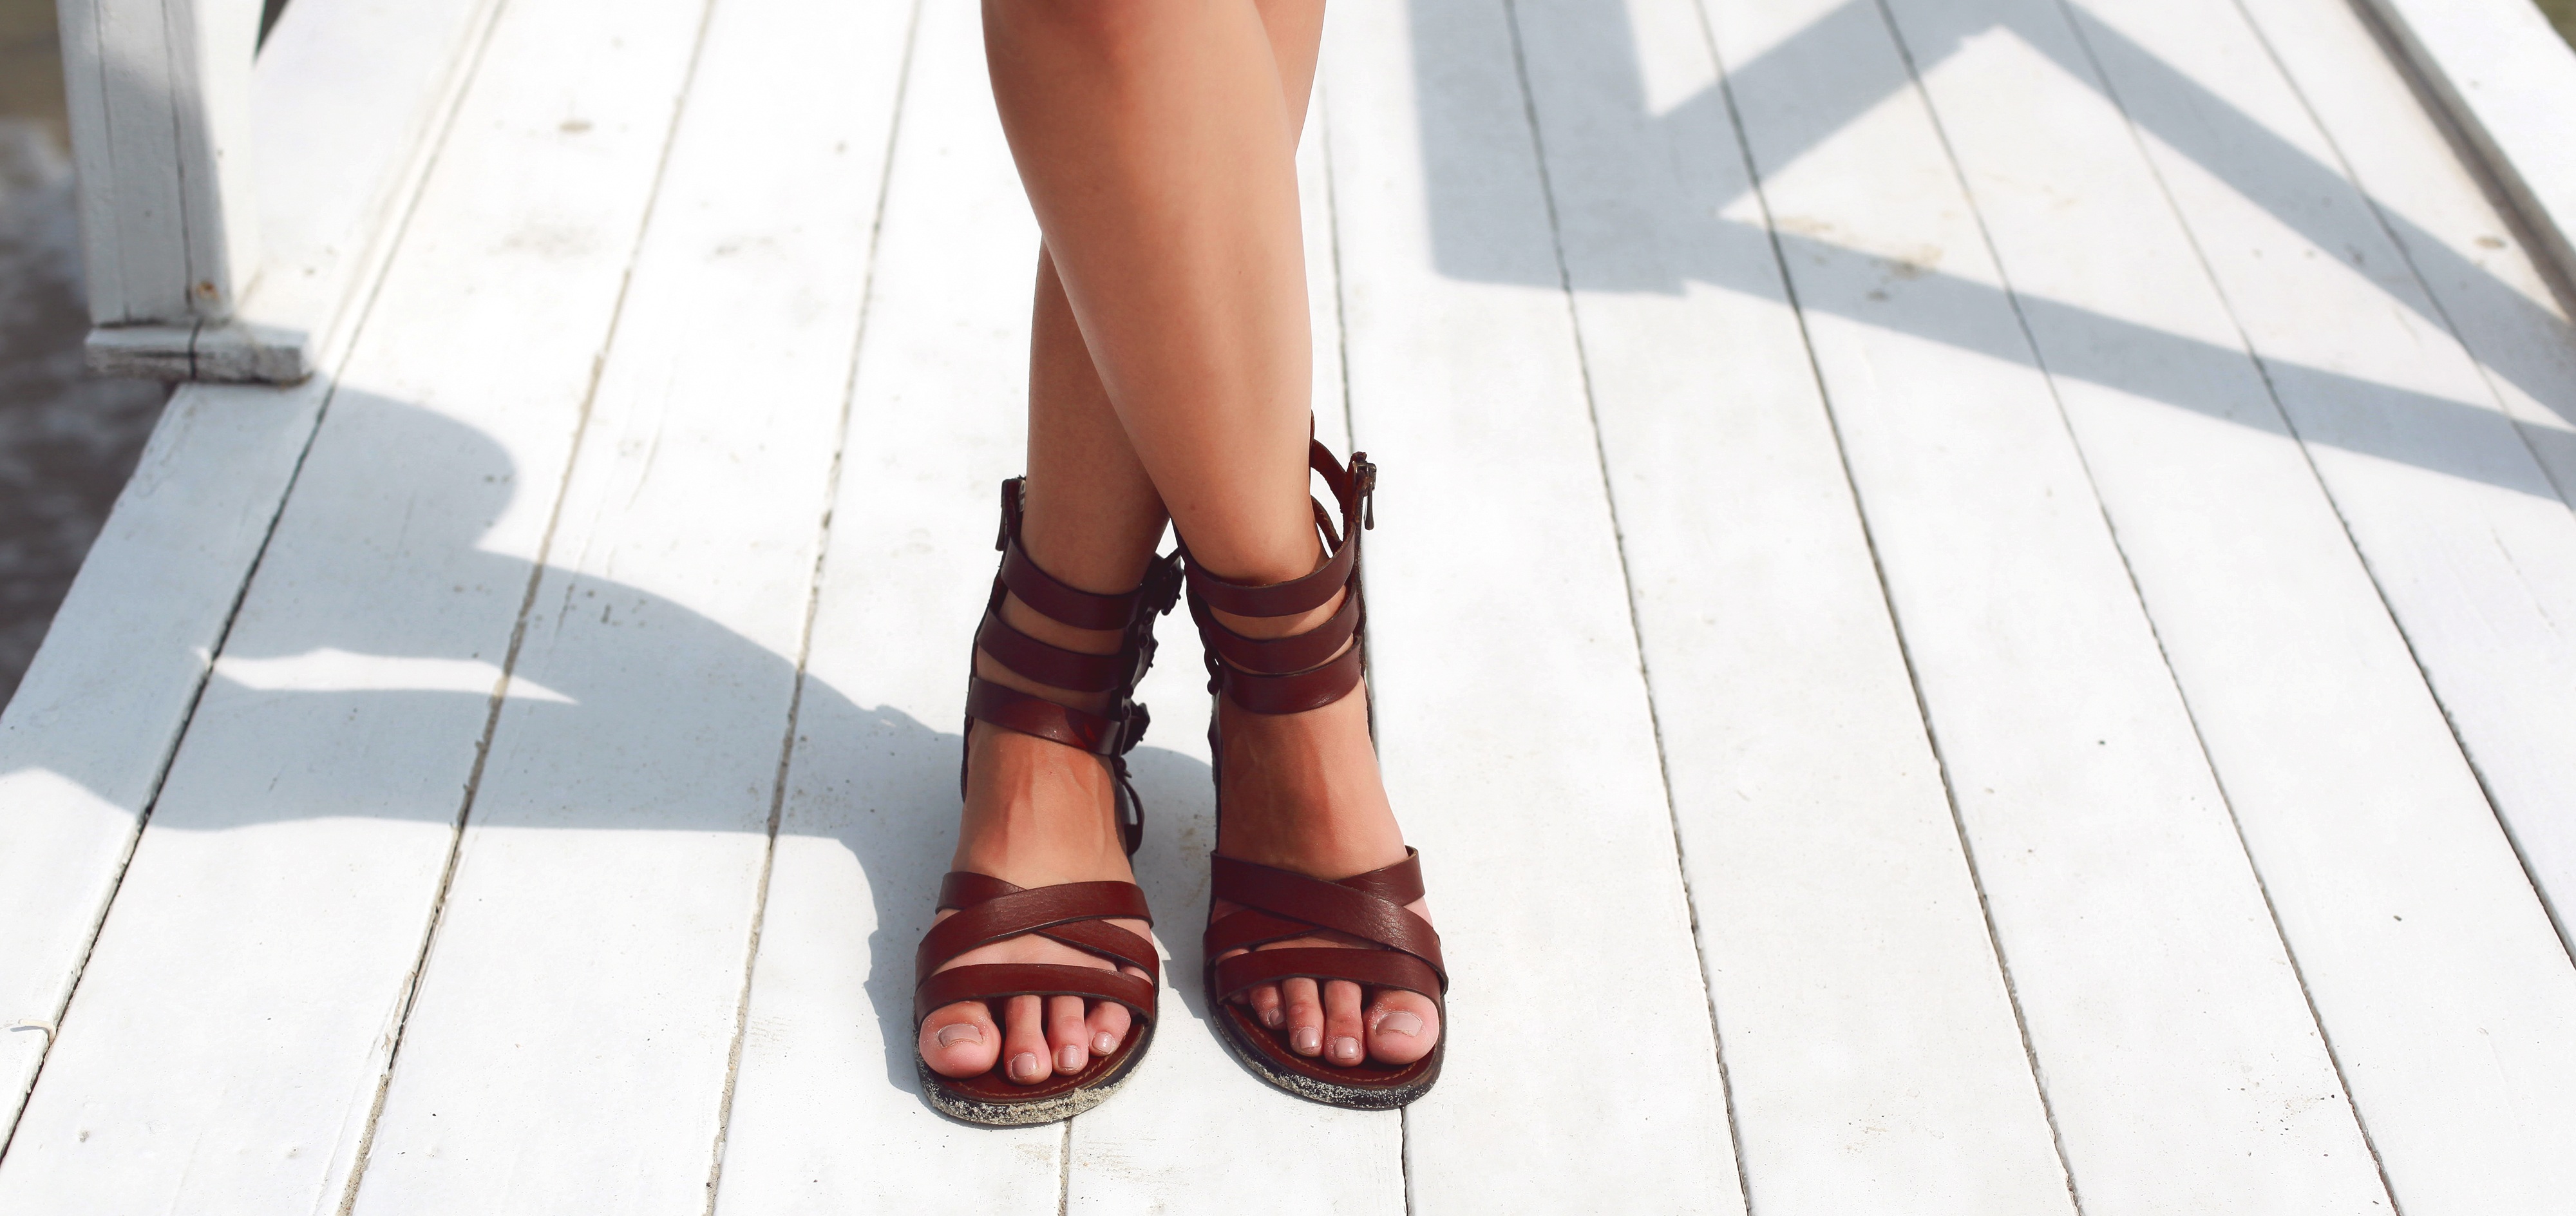 Revisa antes de comprar: estas son las sandalias que serán tendencia este verano